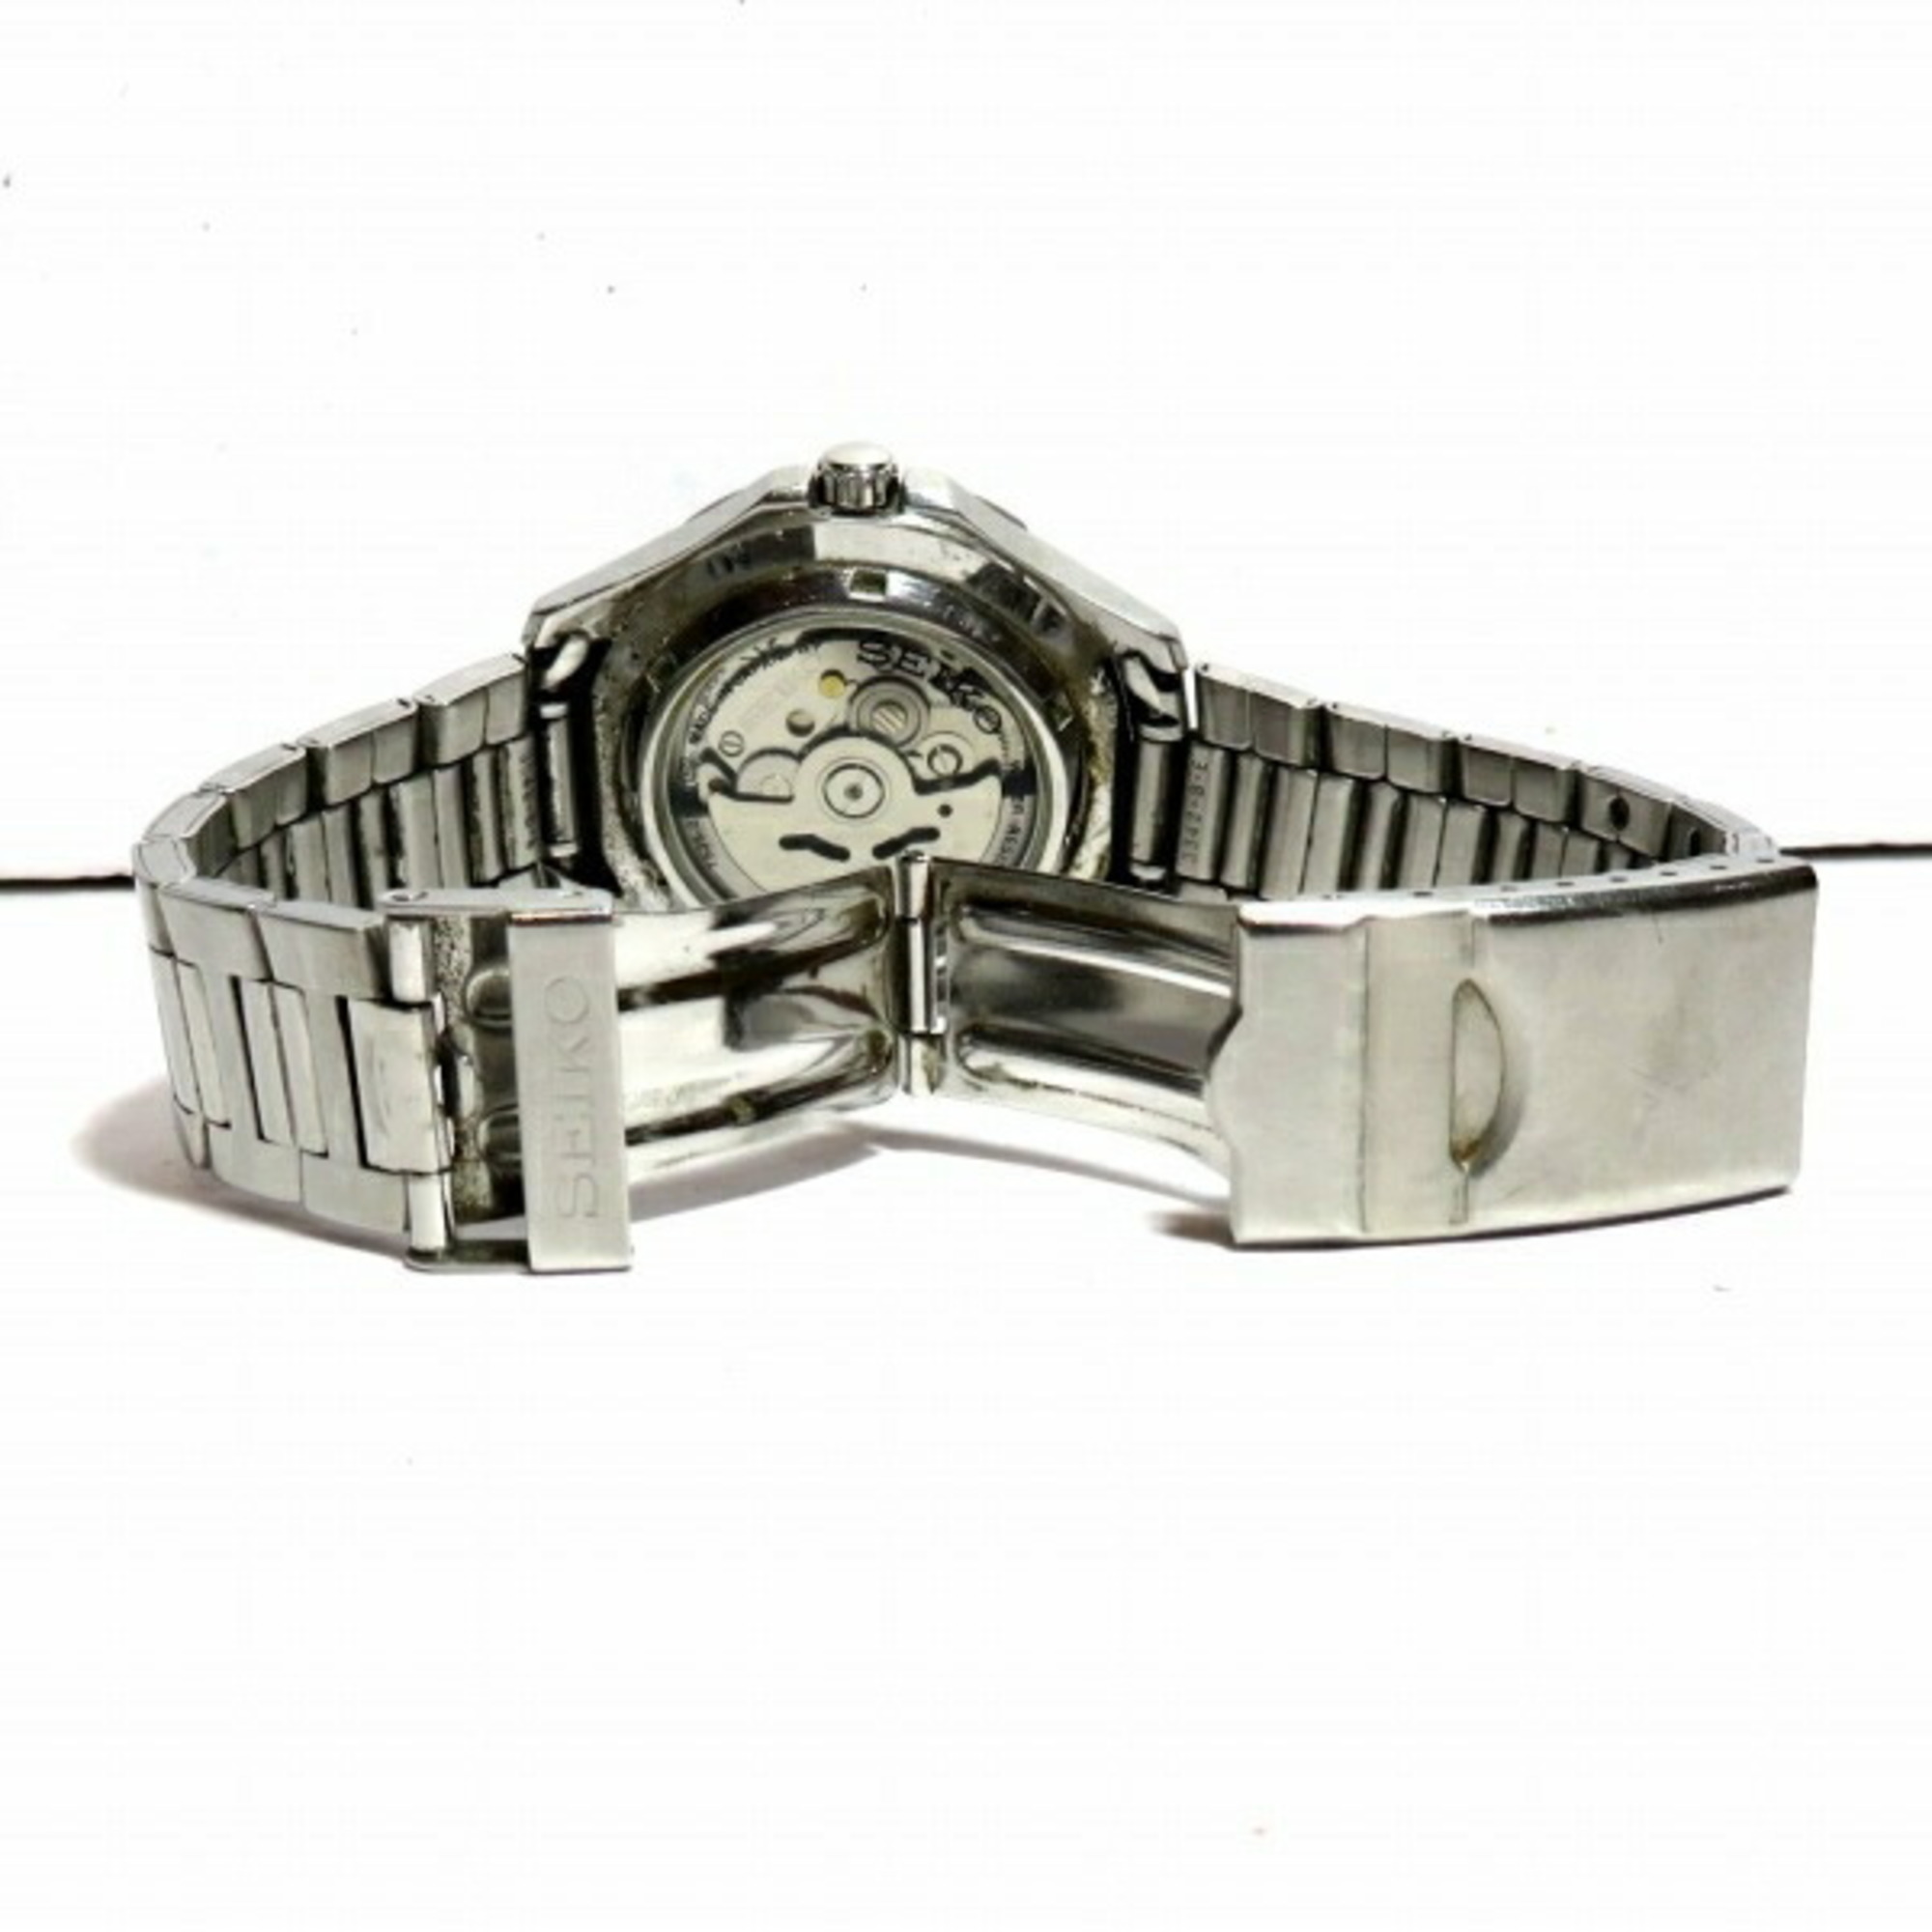 Seiko 5 7S36-01X0 Automatic Black Dial Watch Men's Wristwatch